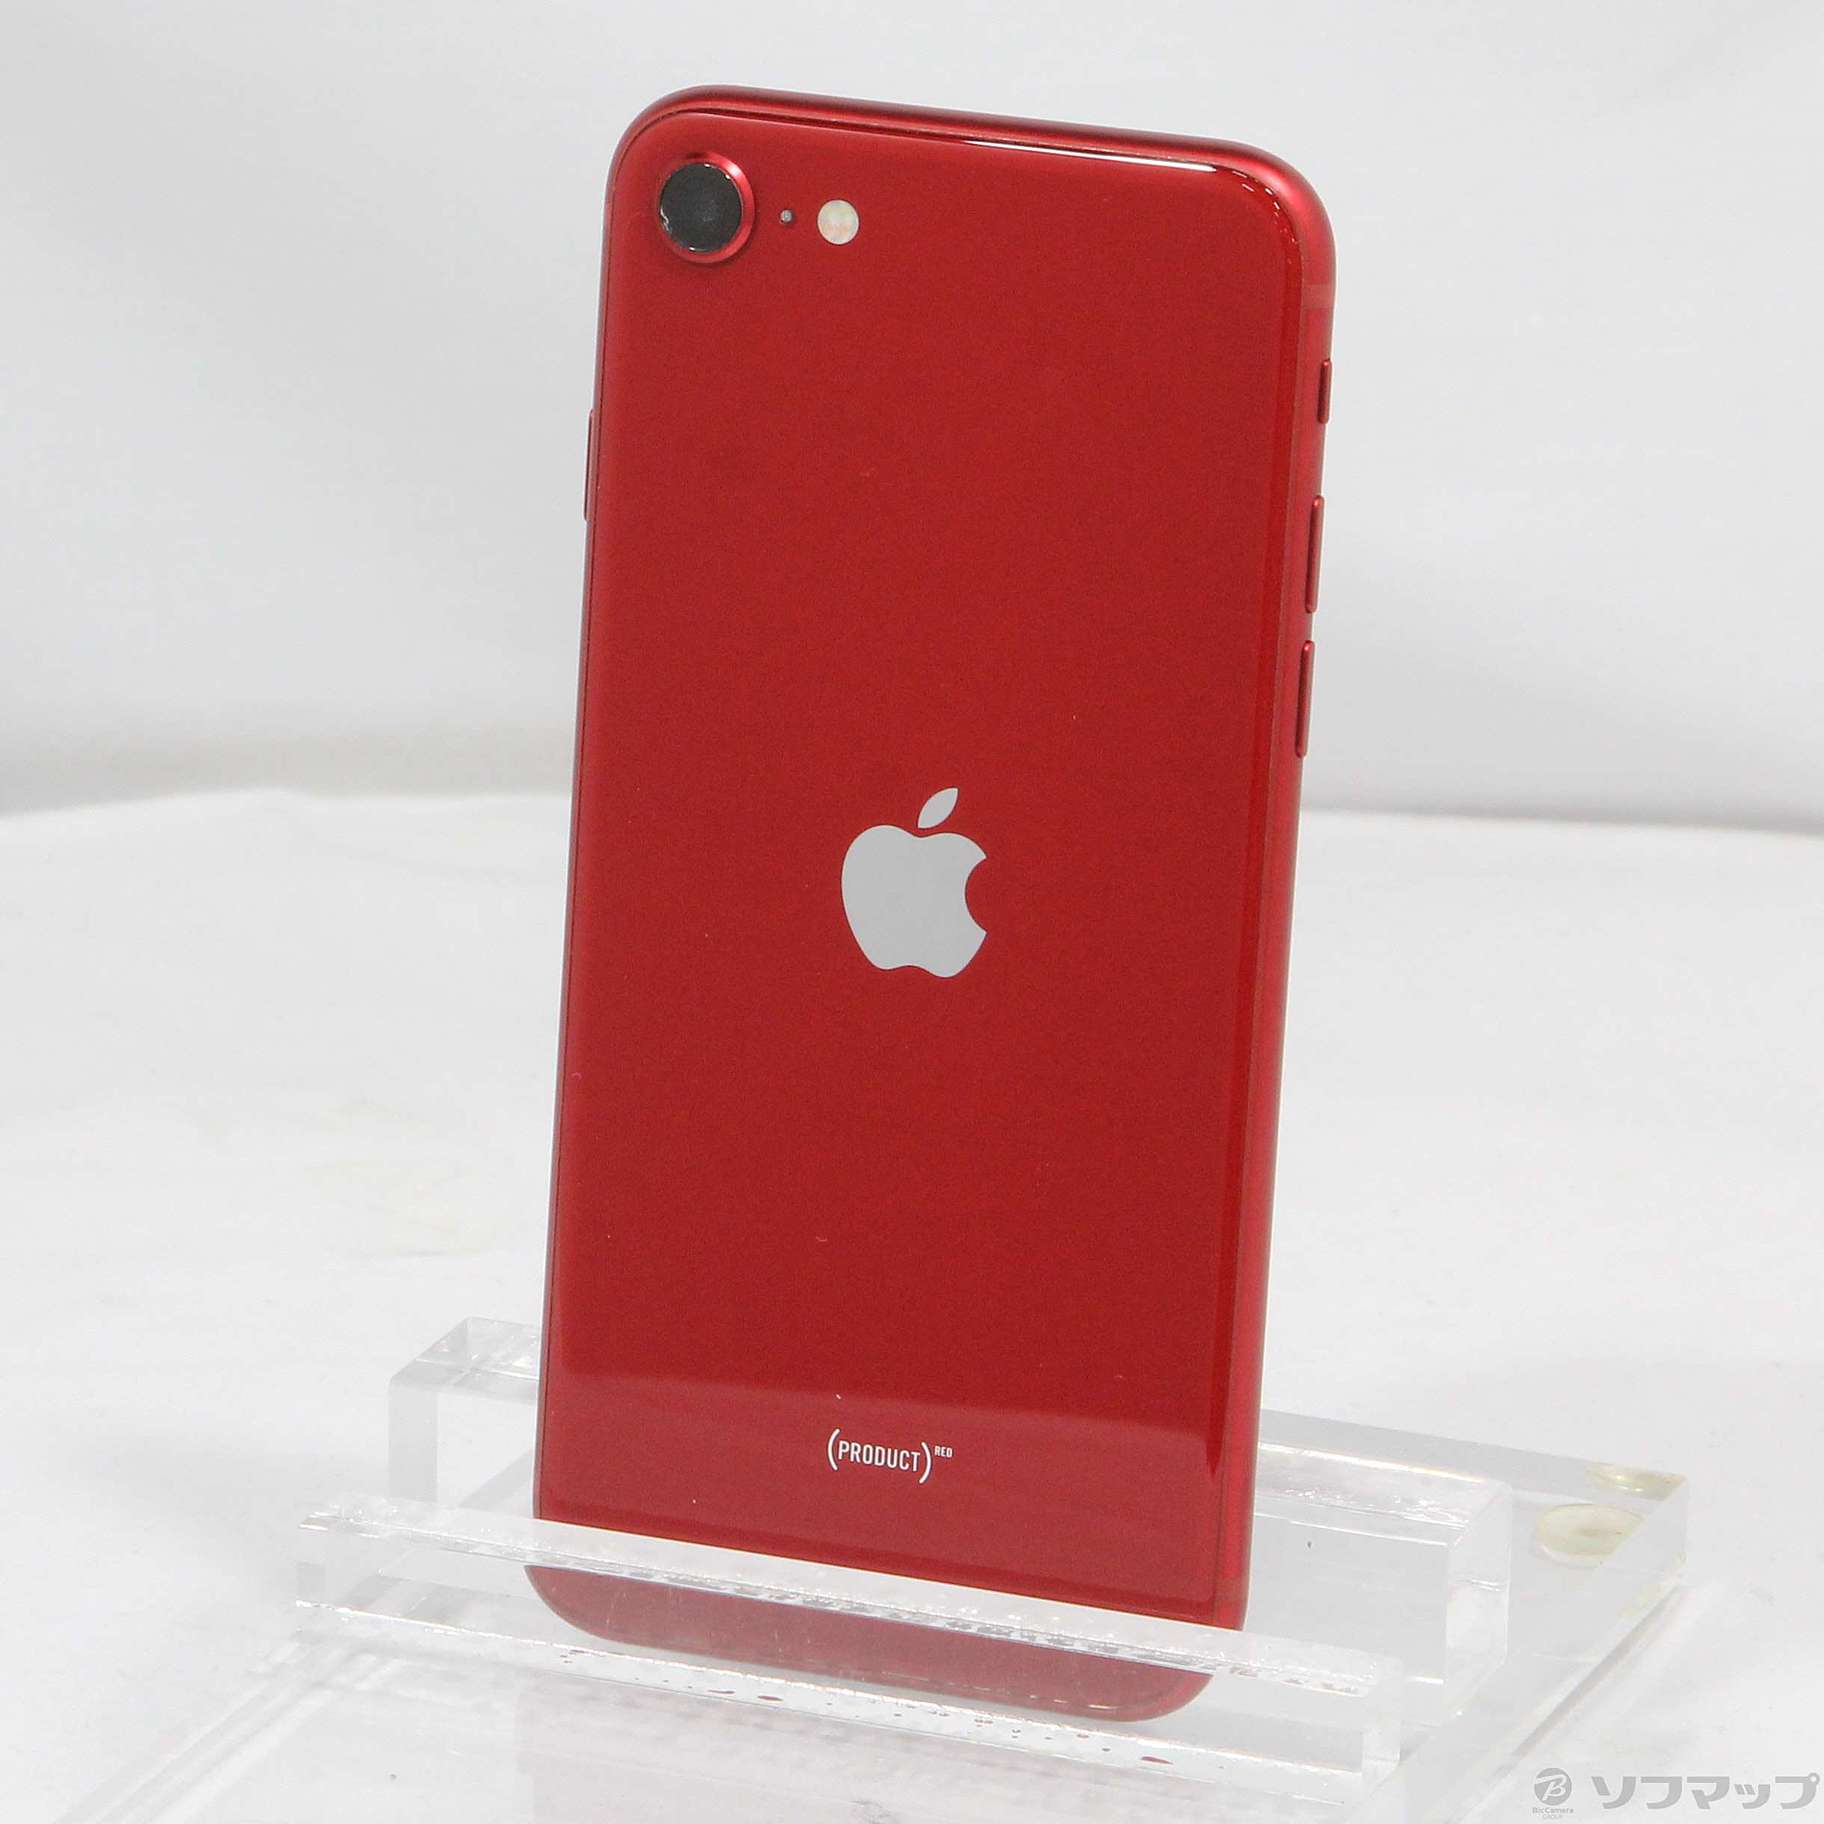 iPhone11 64GB PRODUCT RED SIMフリー 液晶擦り傷多初期化した状態で発送します